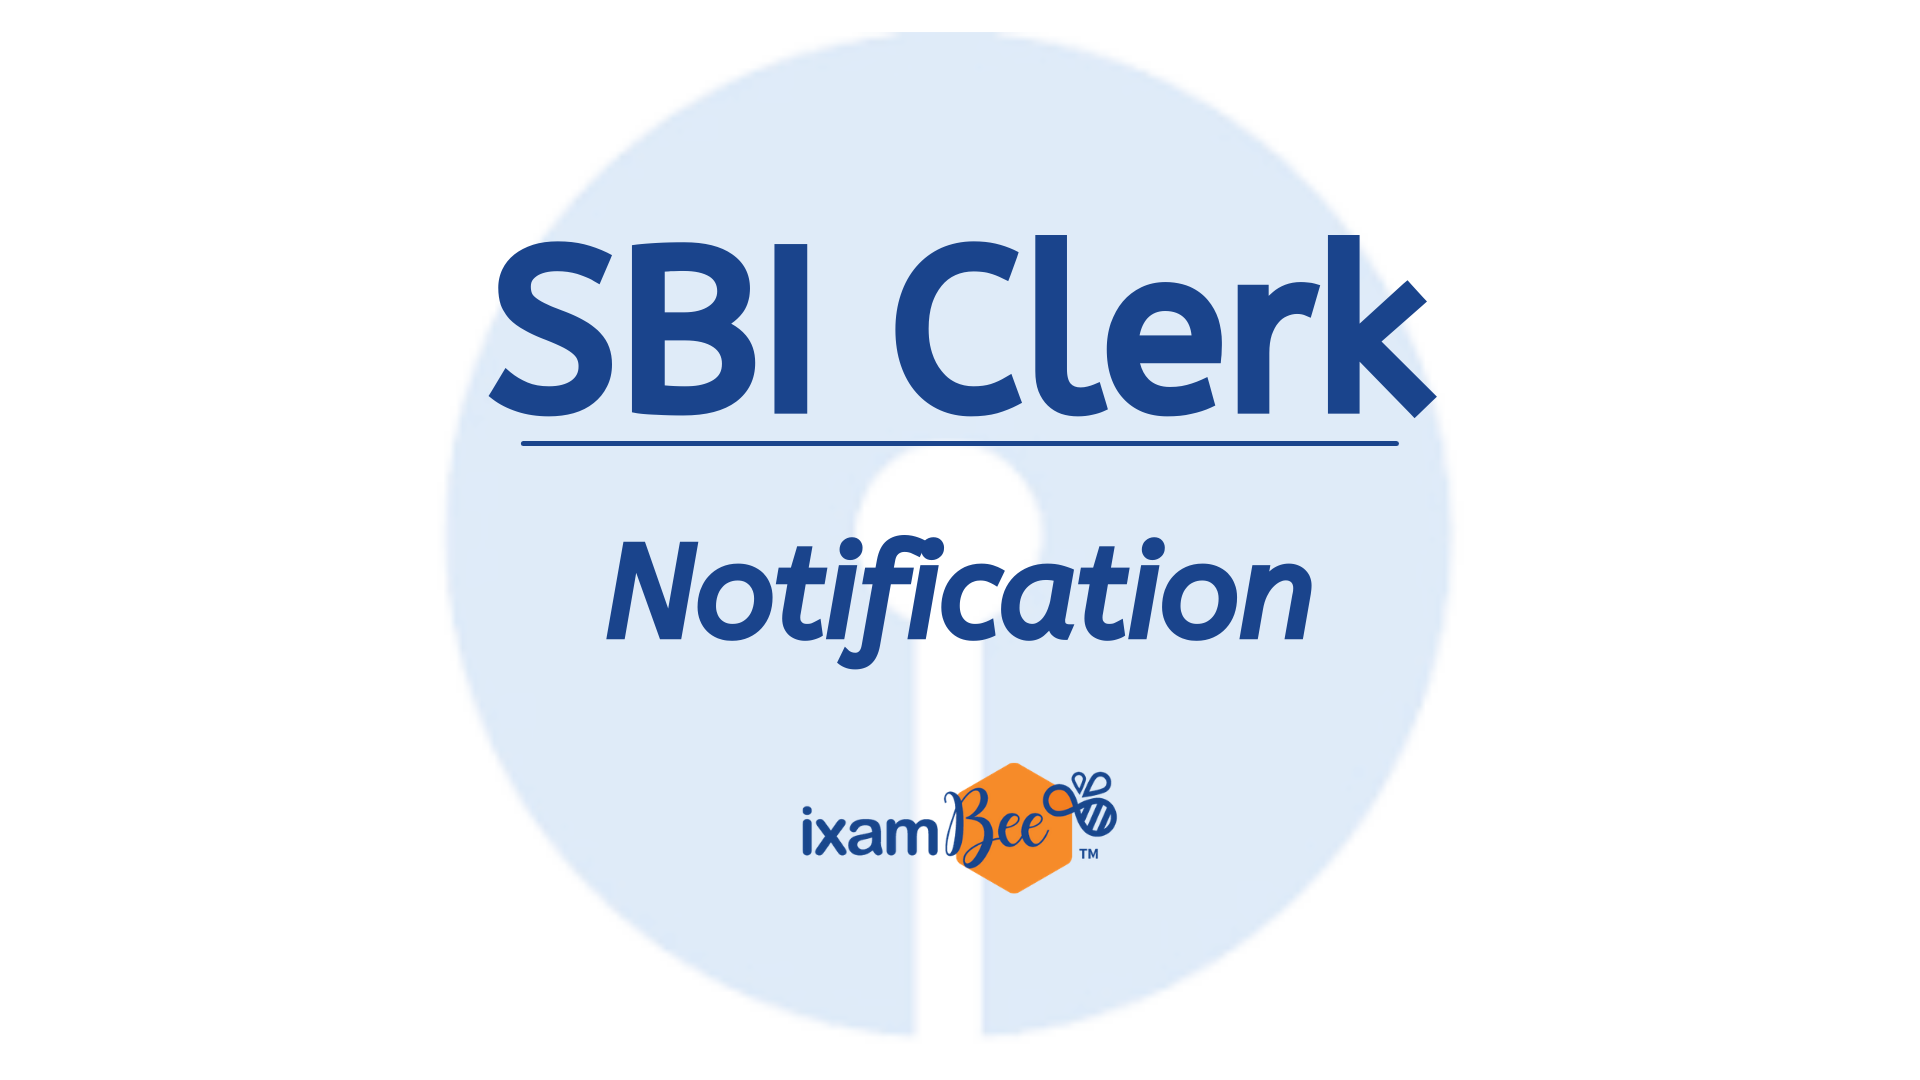 SBI Clerk Notification 2021